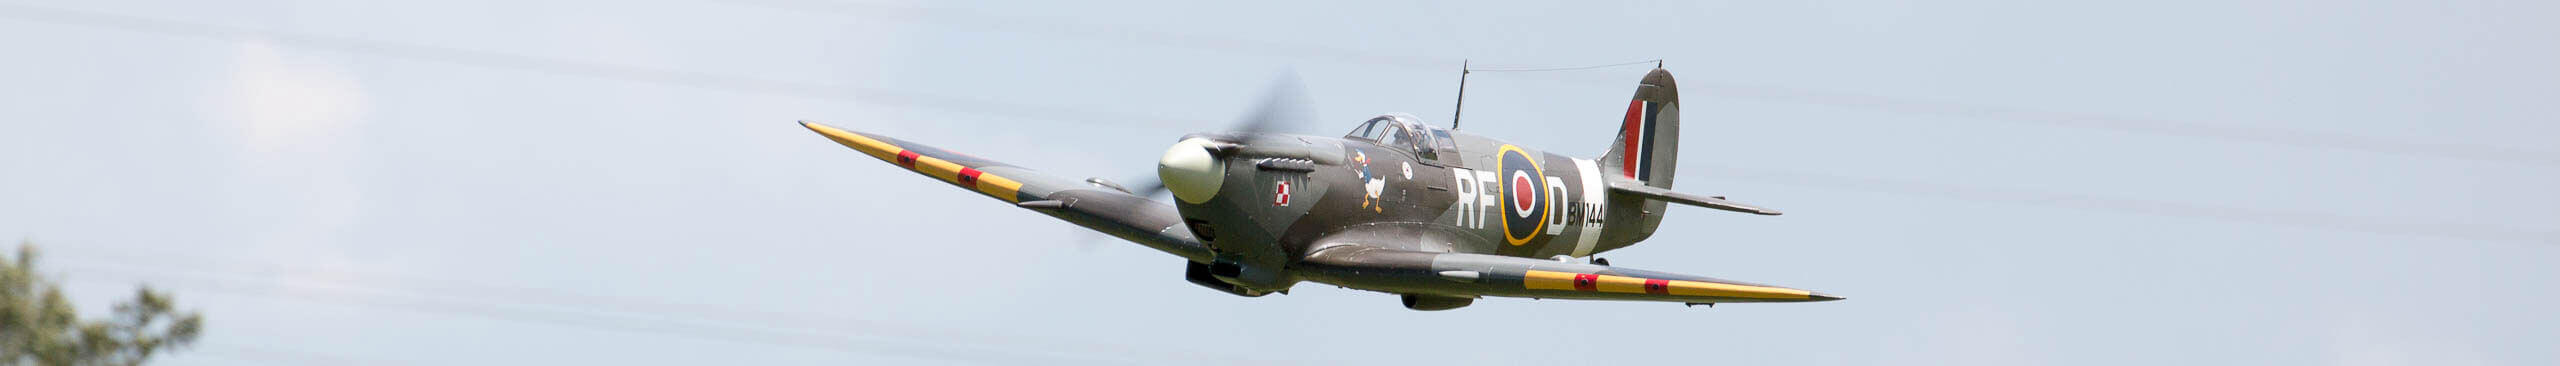 RC-Modell-Spitfire, Kopfbild